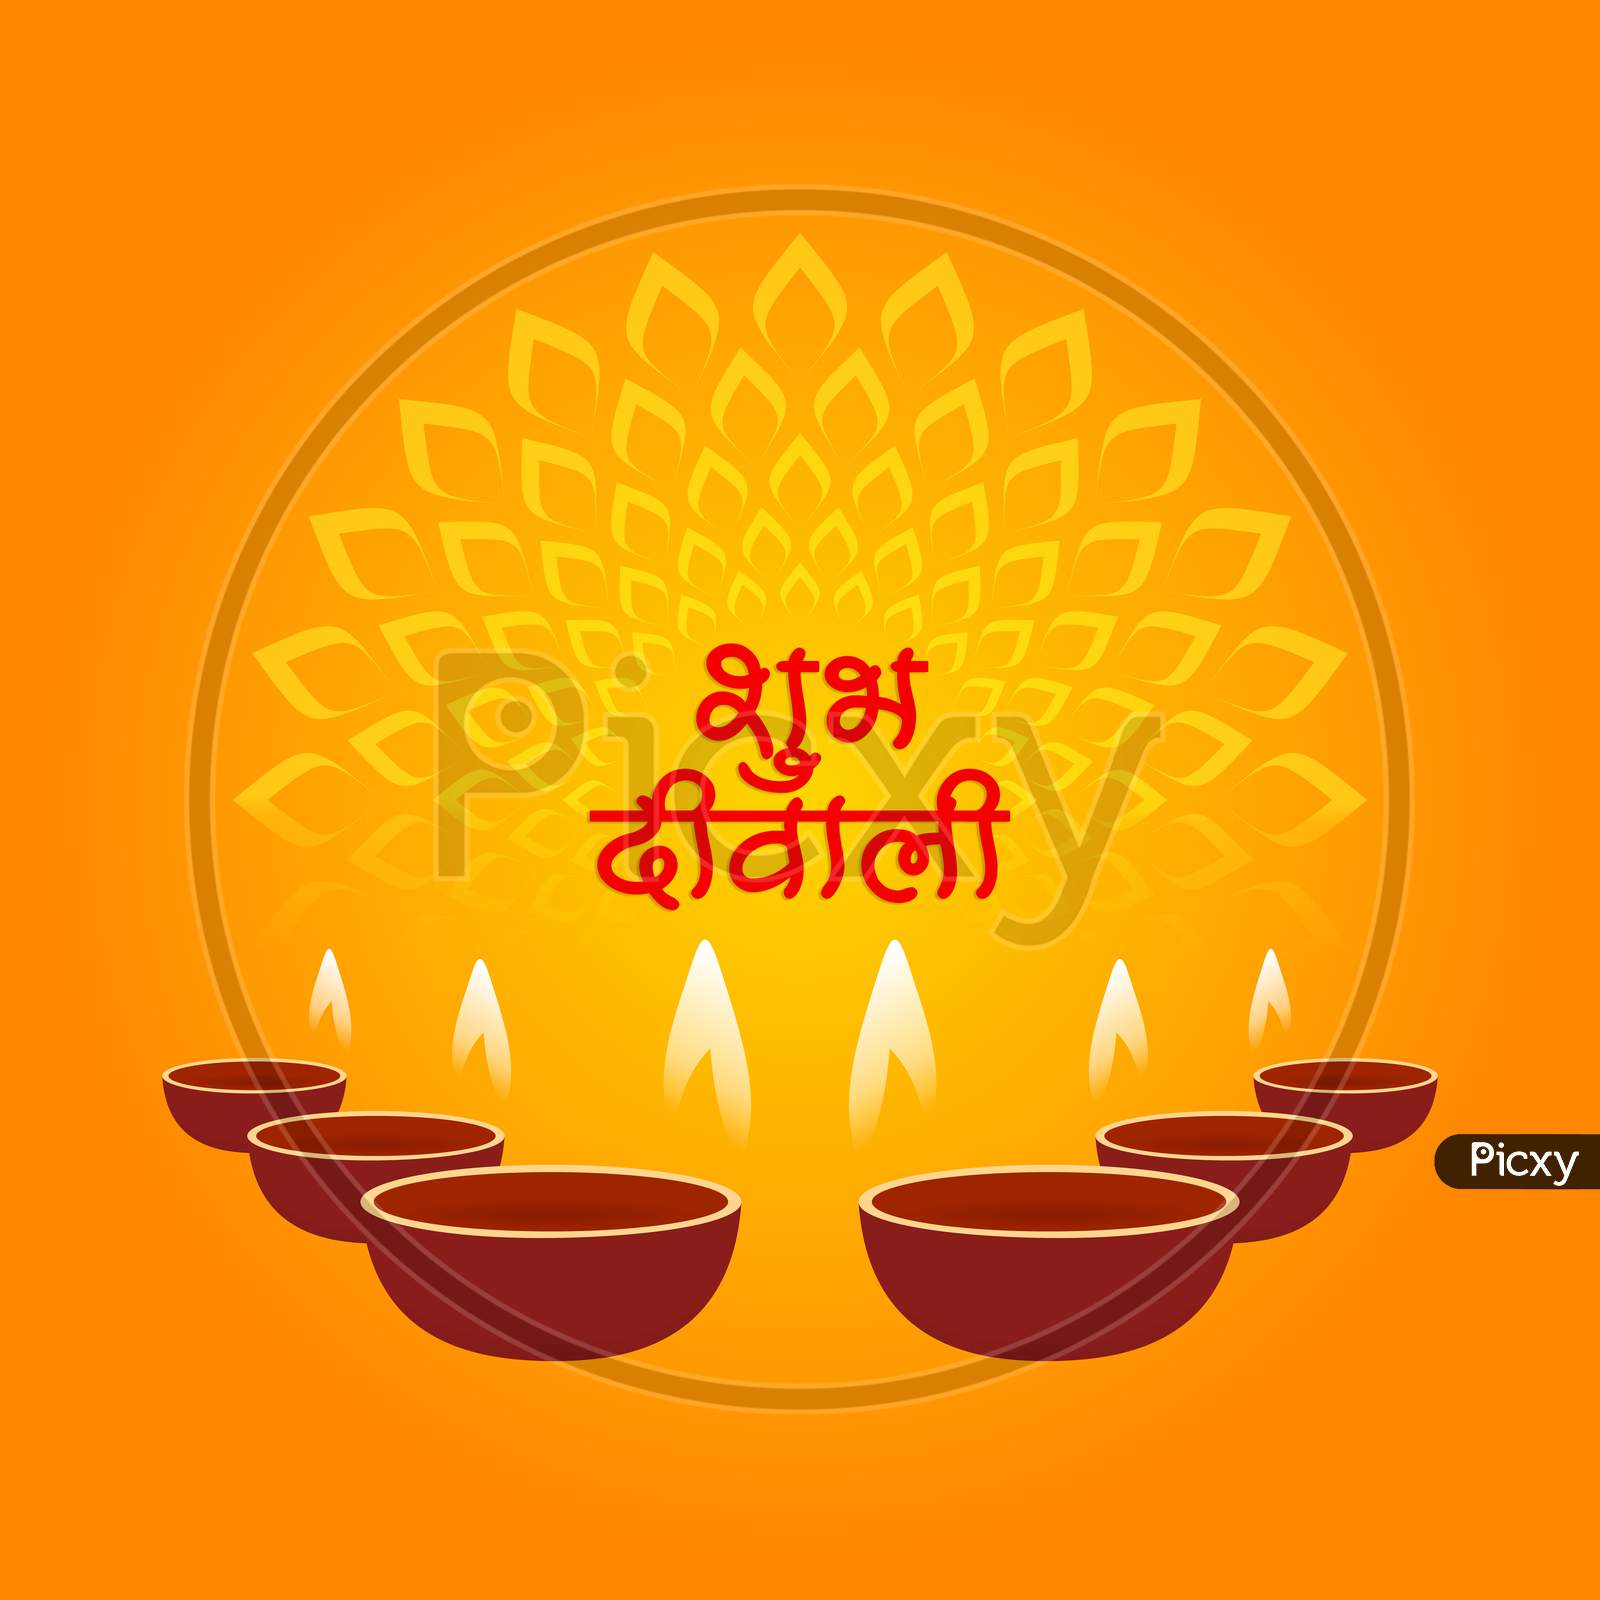 Happy Diwali Greetings In Hindi And Marathi Calligraphy. "Shubh Dipavali" Means Happy Diwali In English.